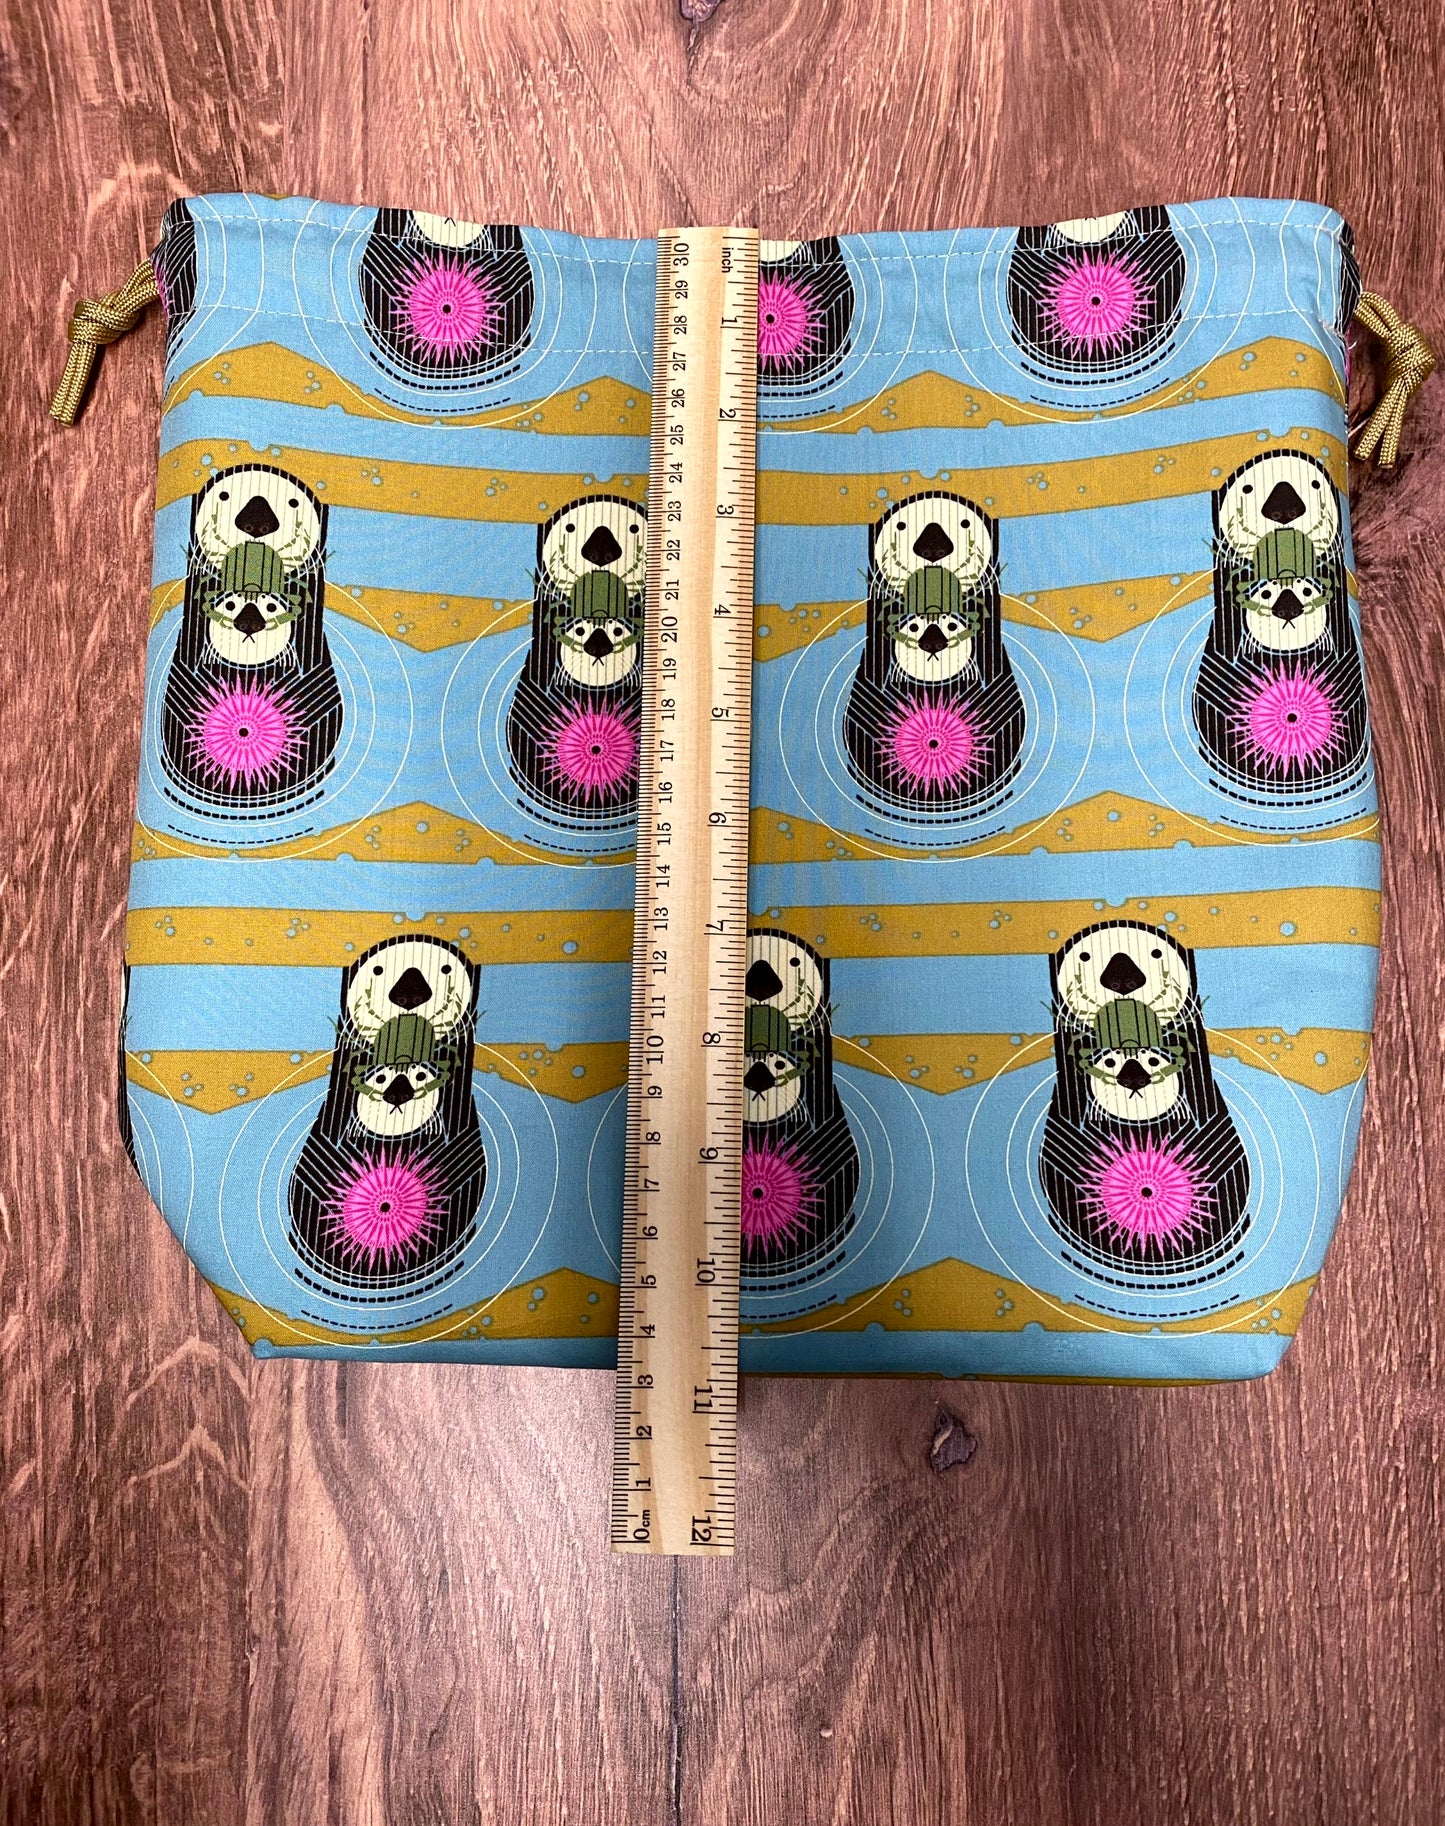 Otter Project Bag - Handmade - Drawstring Bag – Crochet Bag - Knitting Bag - Cross Stitch Bag - Animal - Zoo